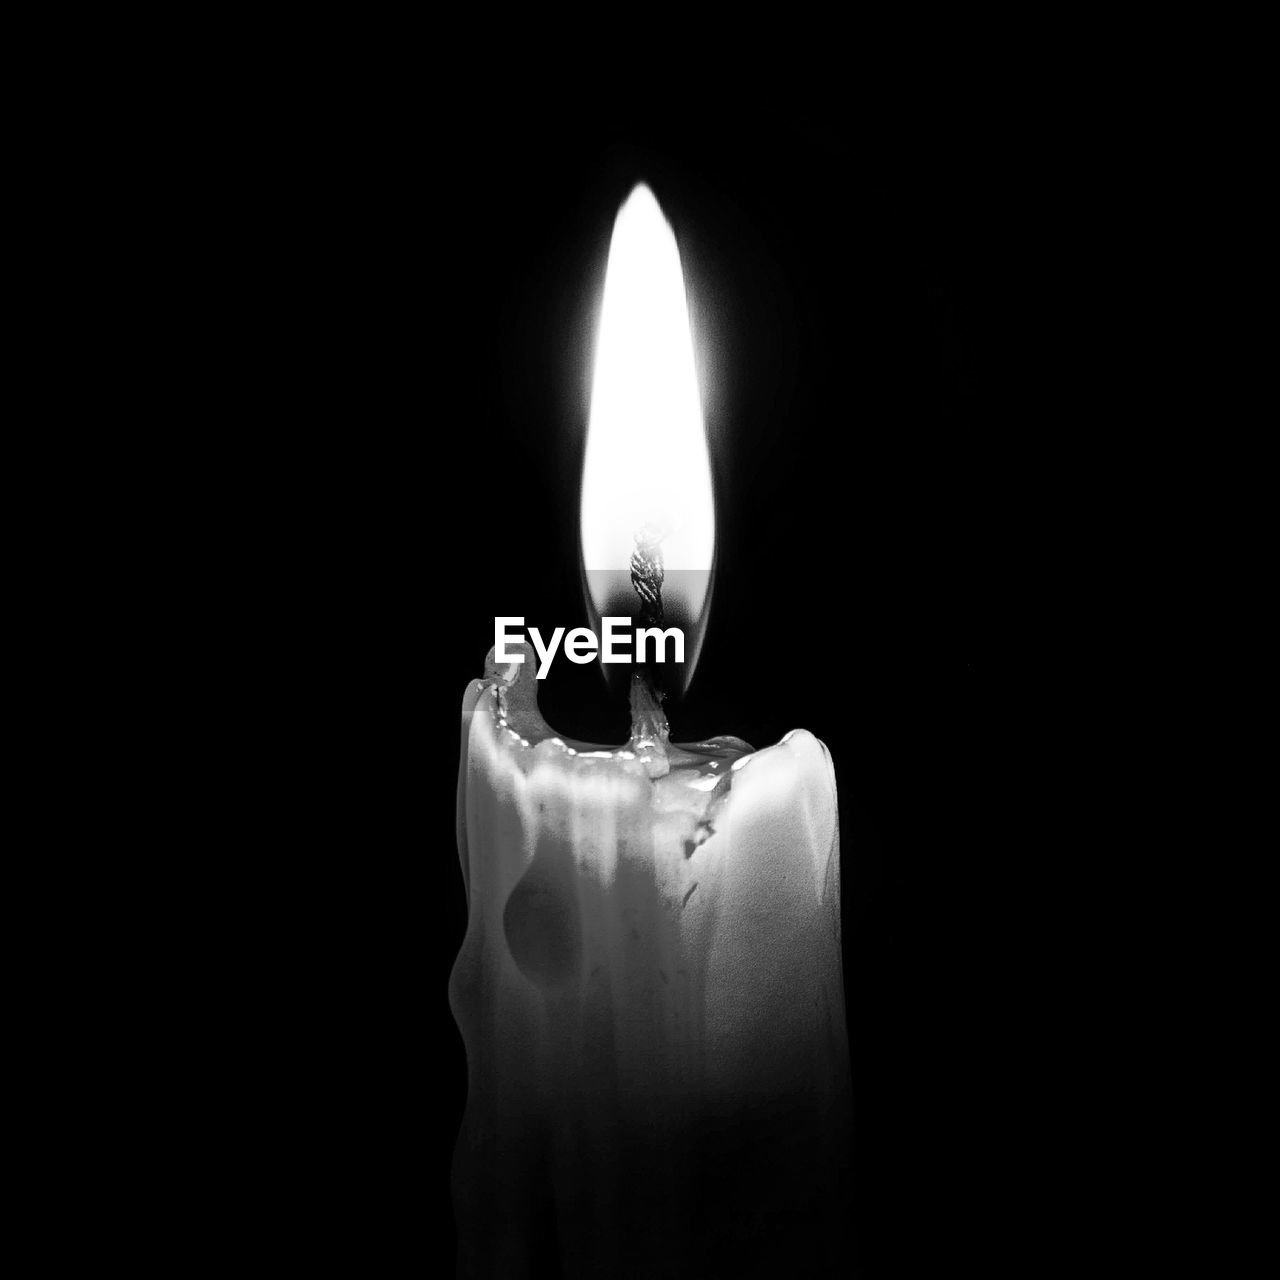 Lit candle against black background